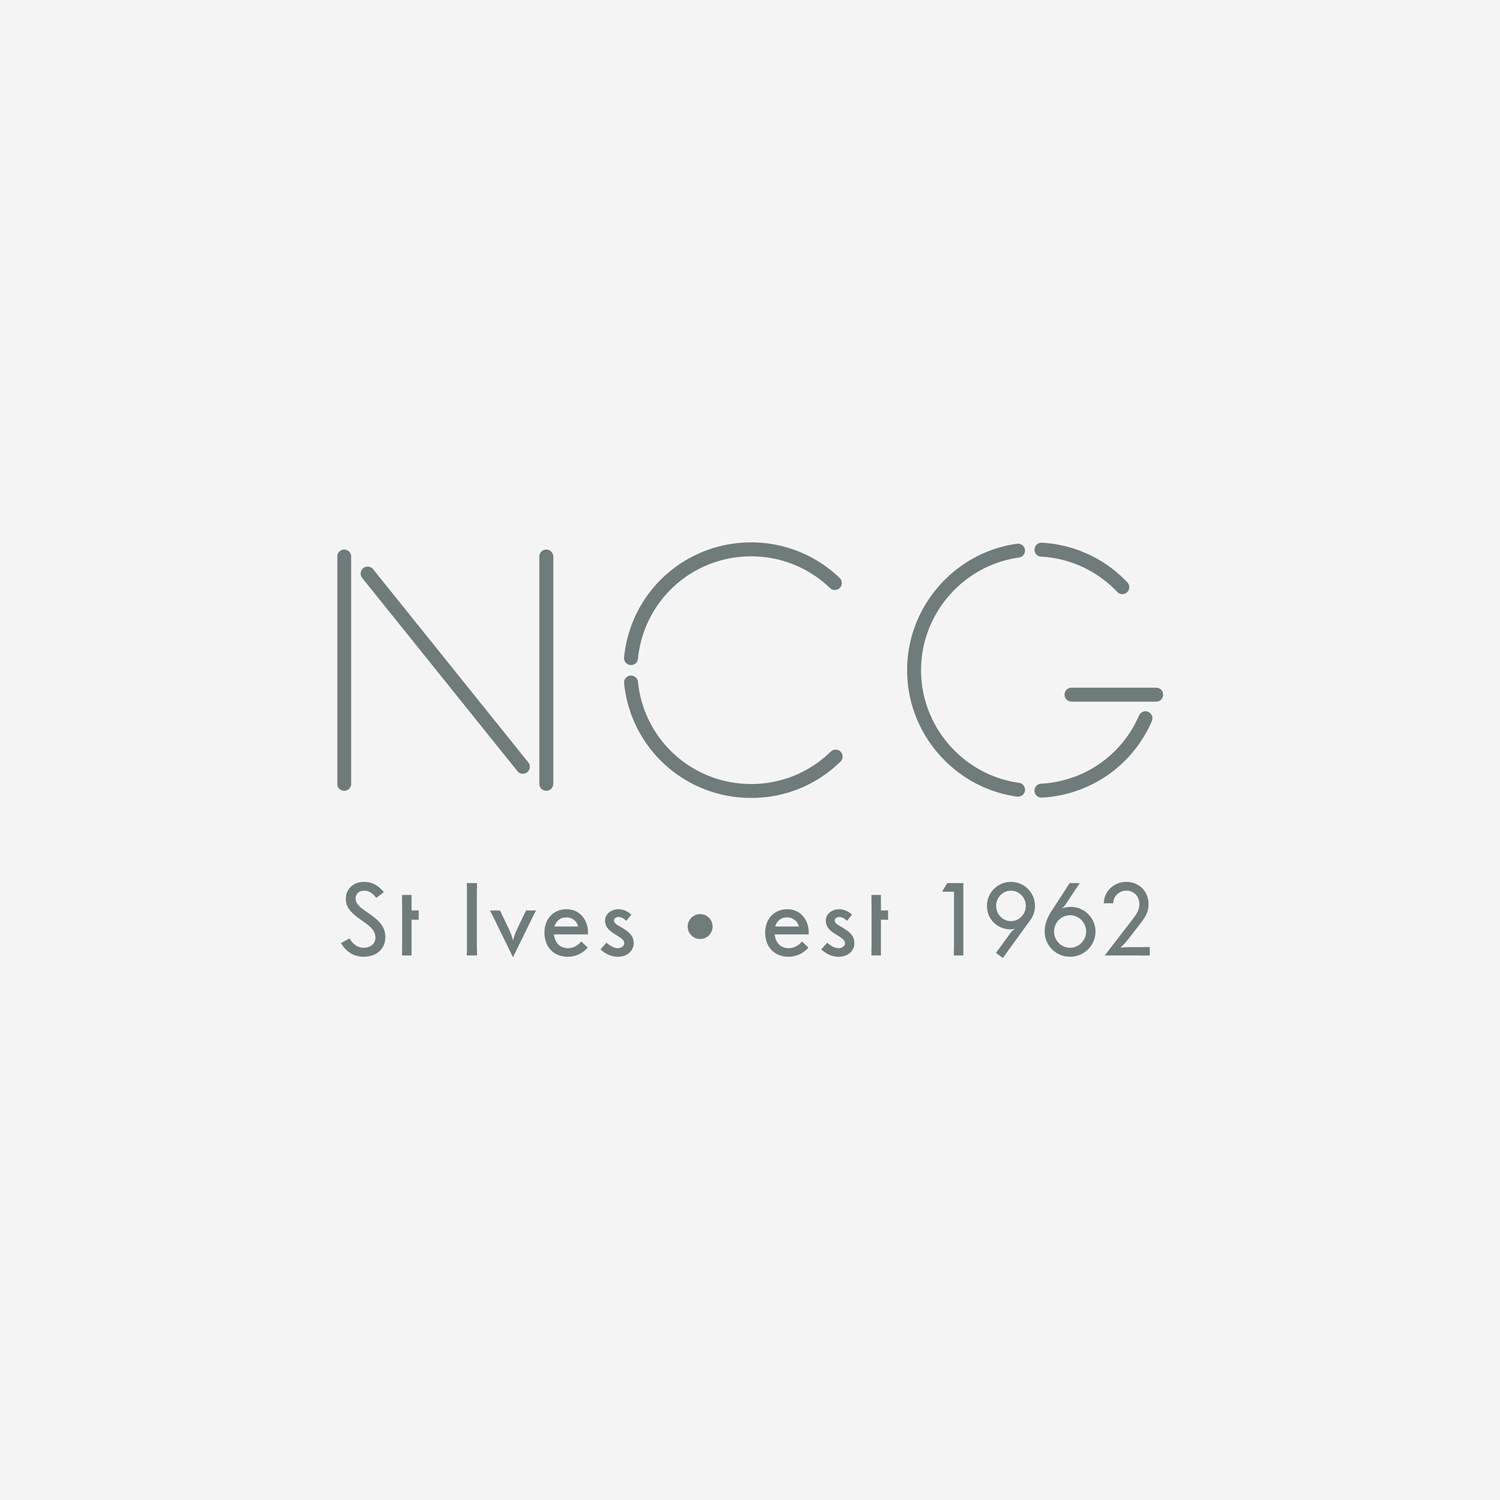 Sq Logo - meor-studio-ncg-sq-logo-on-grey2 - Meor Design Agency, St Ives